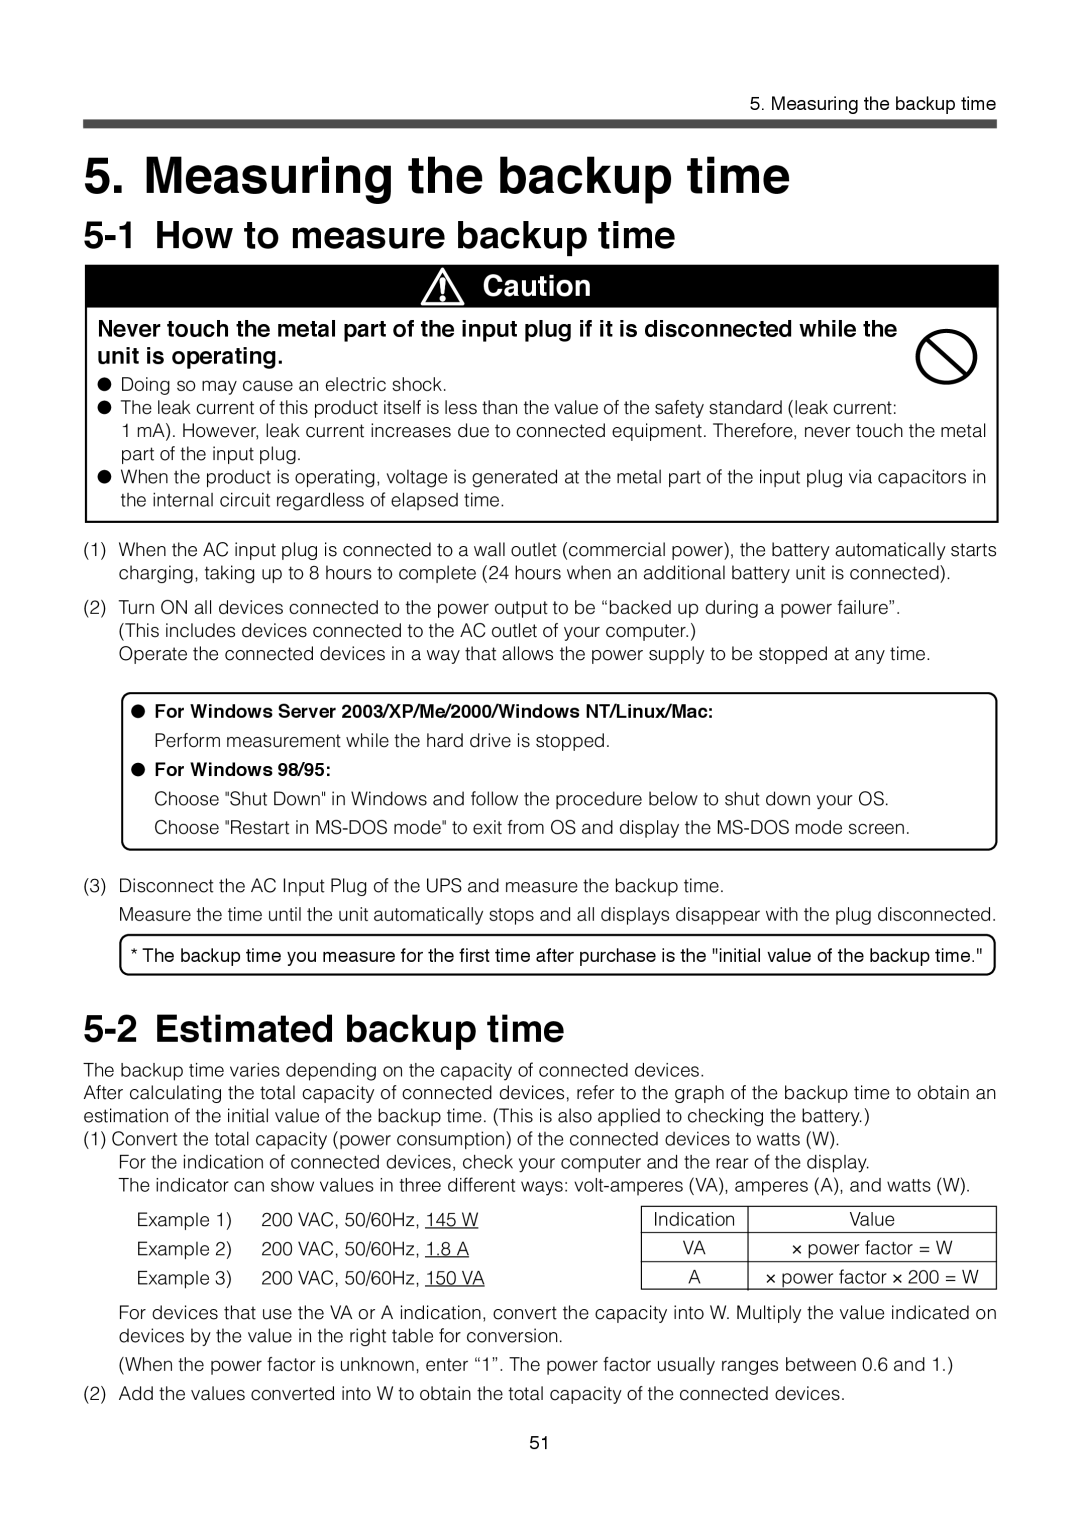 Omron BU1002SW, BU3002SW Measuring the backup time, How to measure backup time, Estimated backup time, For Windows 98/95 